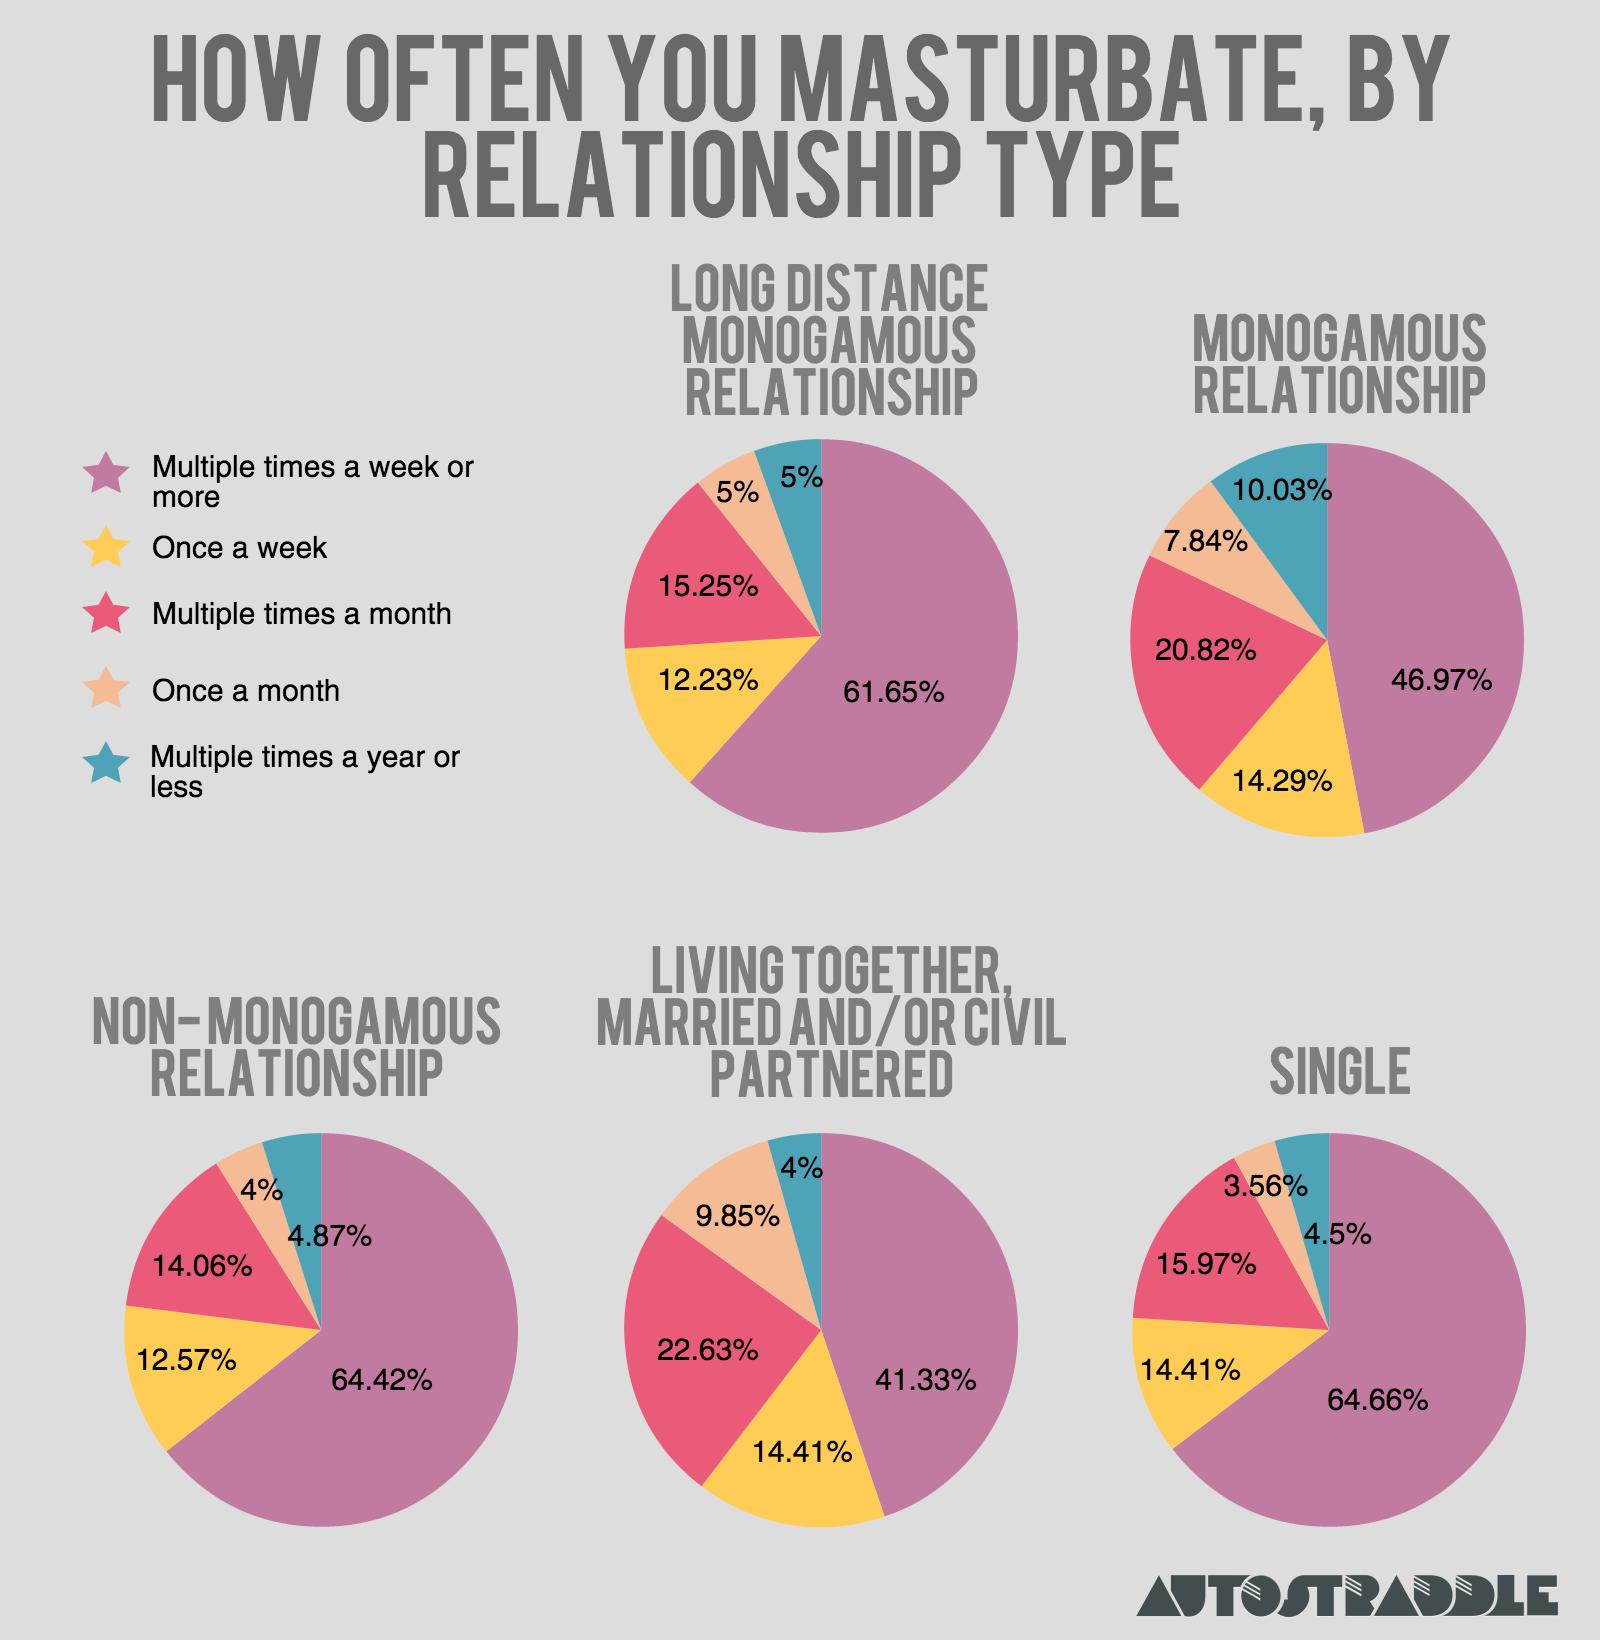 How most woman masturbate